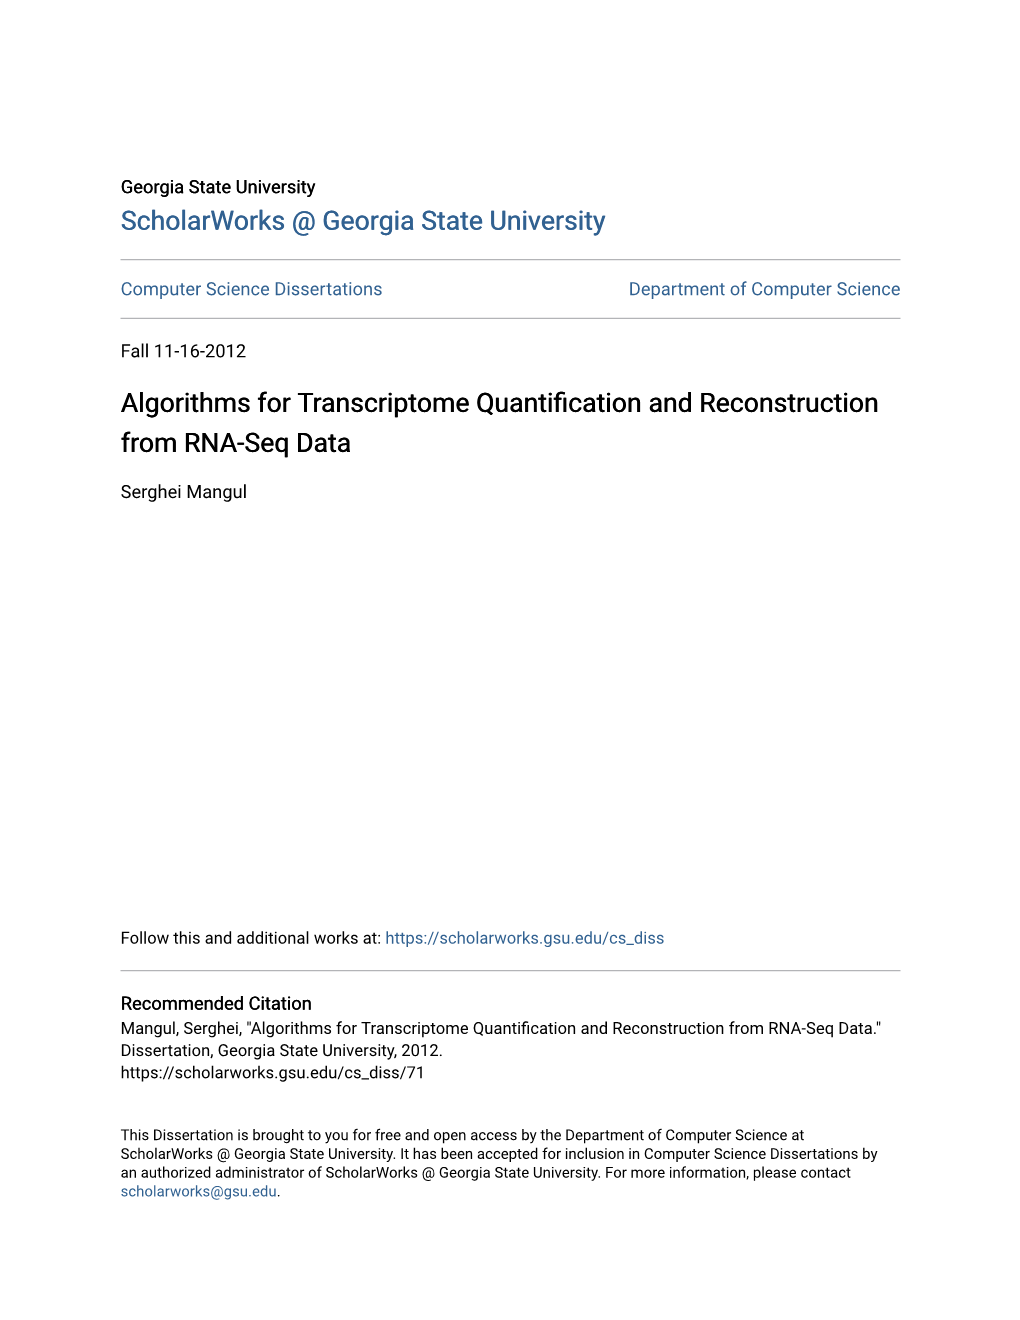 Algorithms for Transcriptome Quantification and Reconstruction from RNA-Seq Data